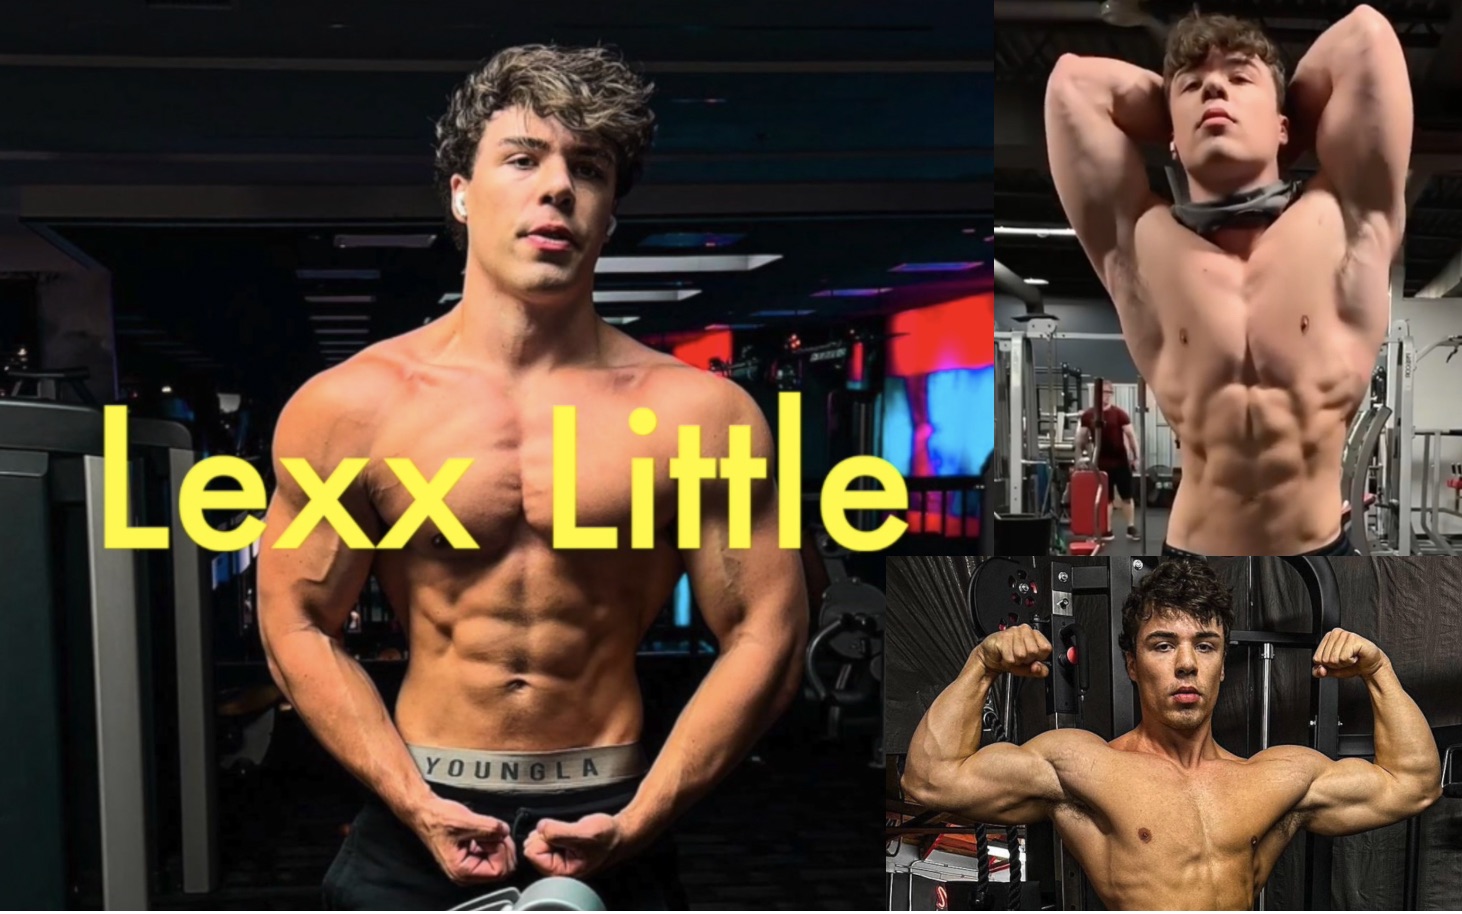 Bodybuilder Cum Tribute - Lexx Little